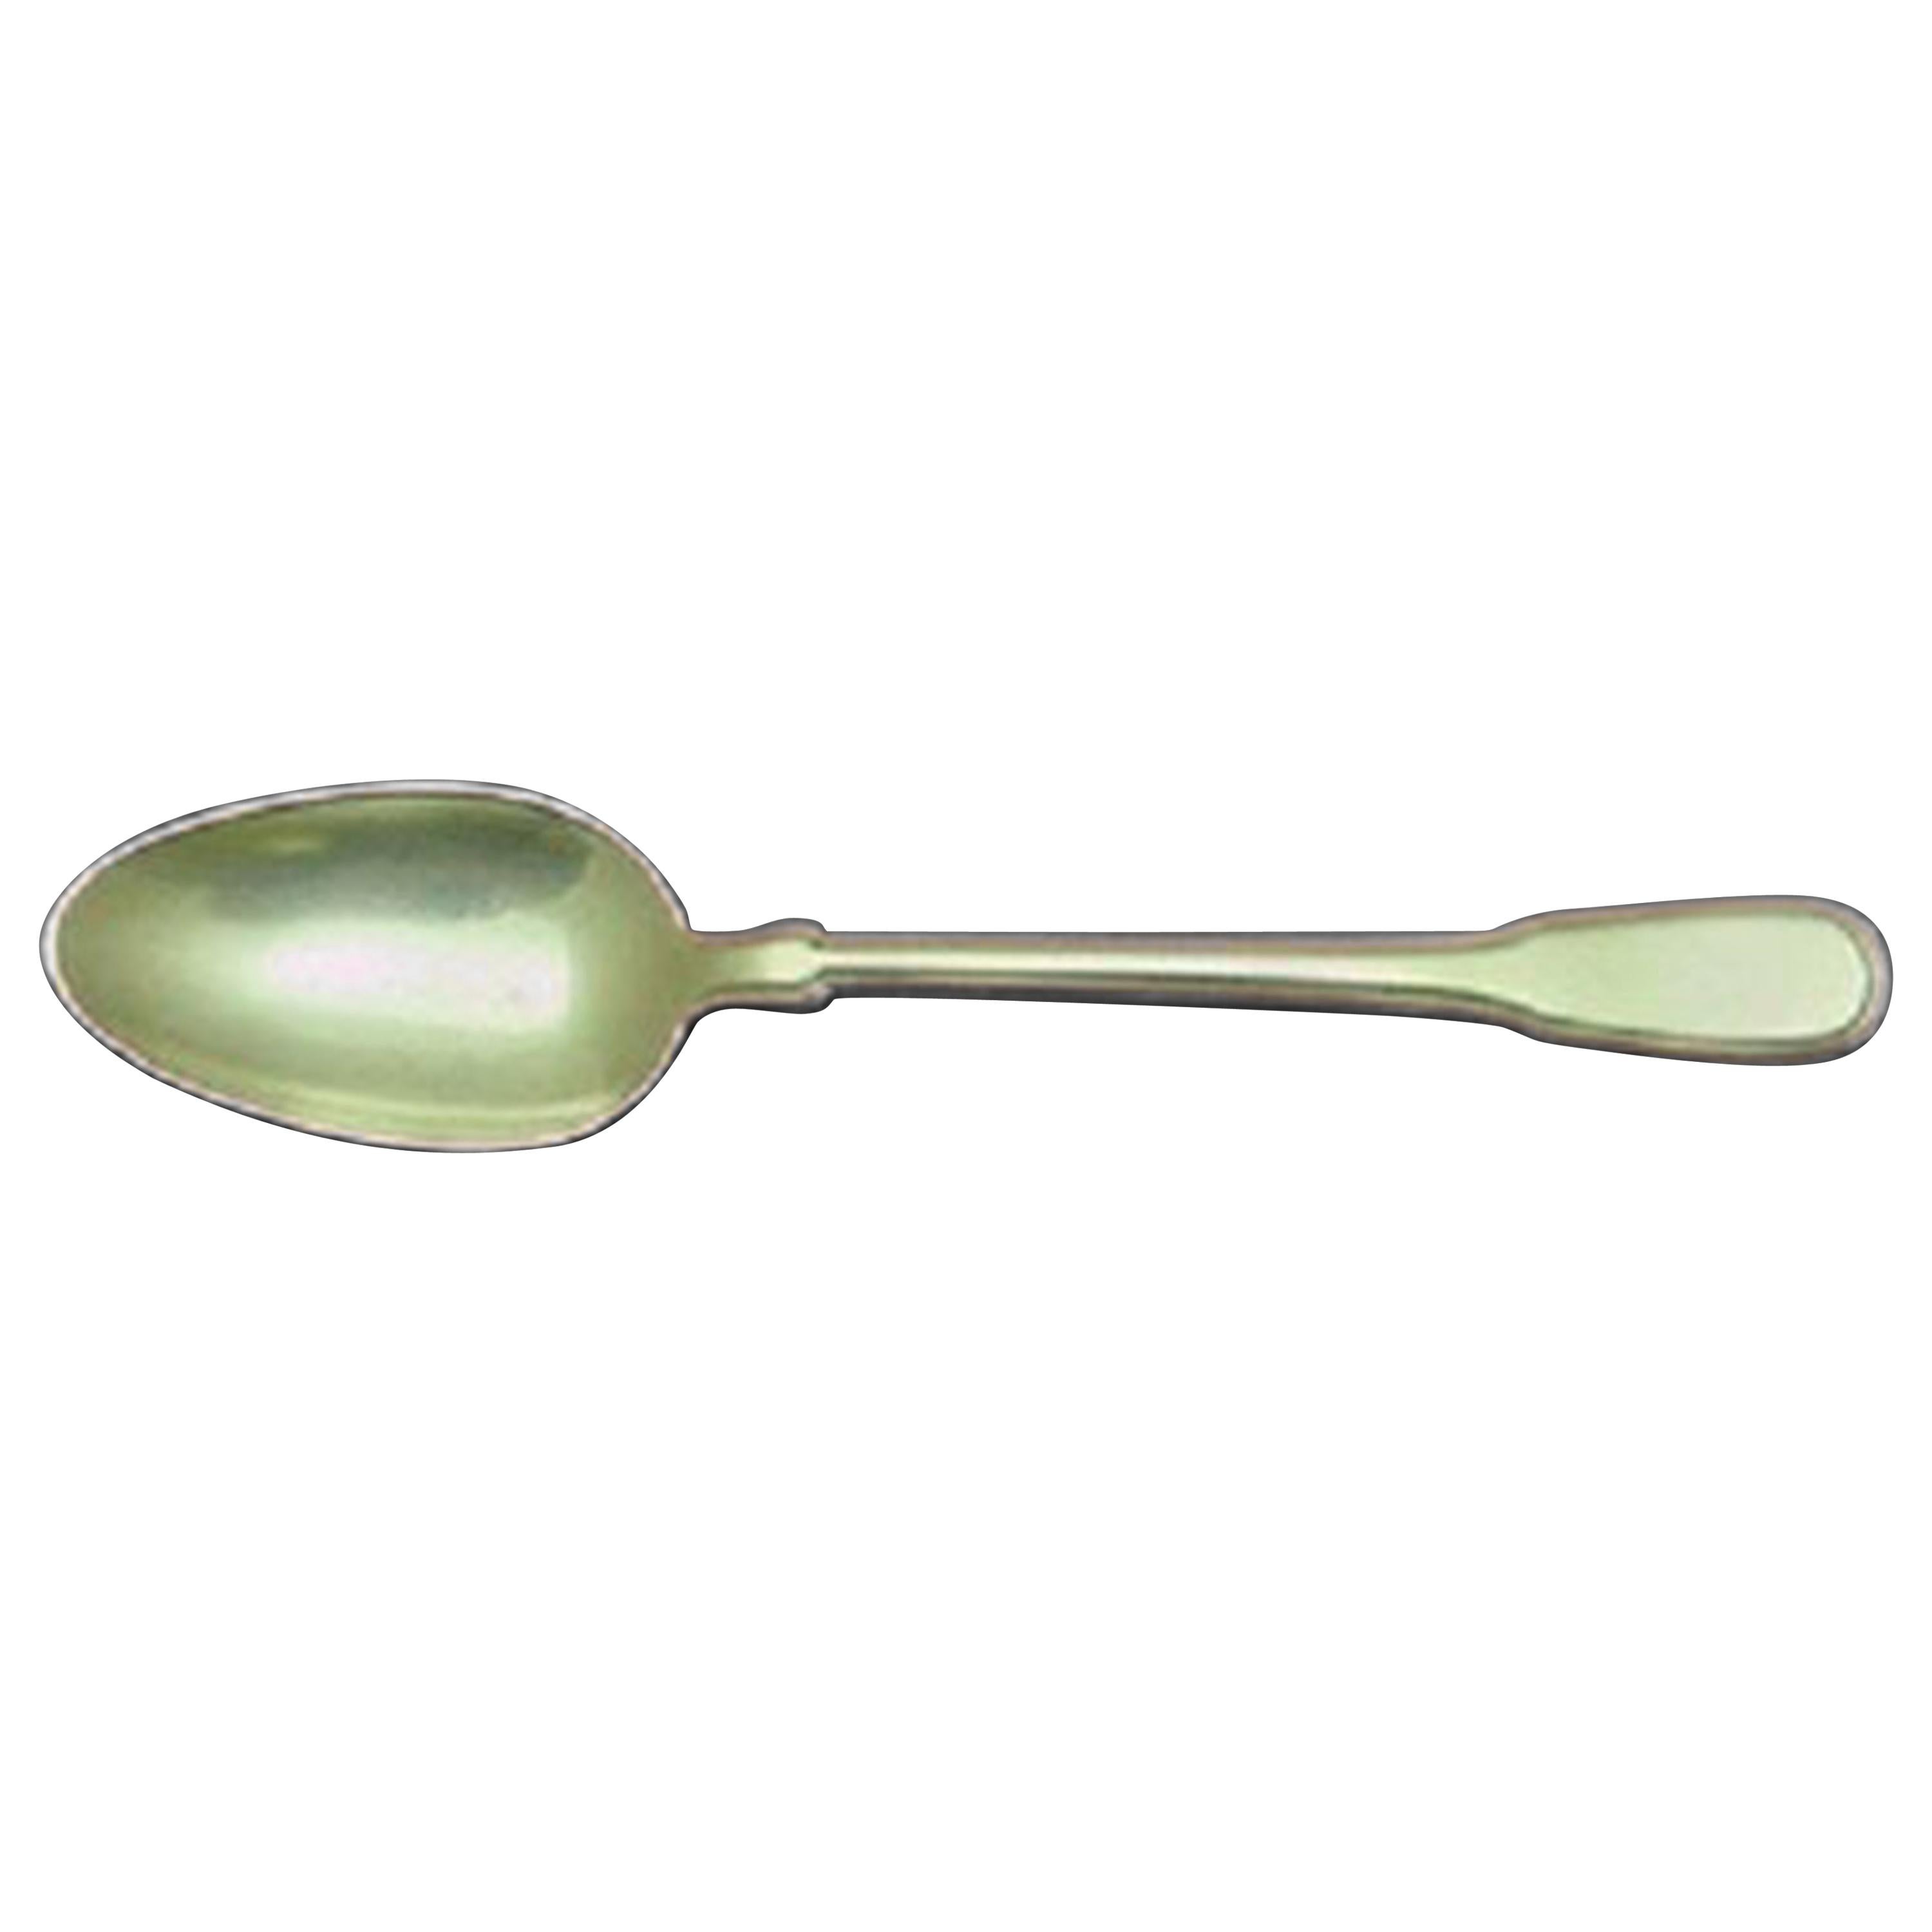 Hamilton aka Gramercy by Tiffany Sterling Silver Place Soup Spoon